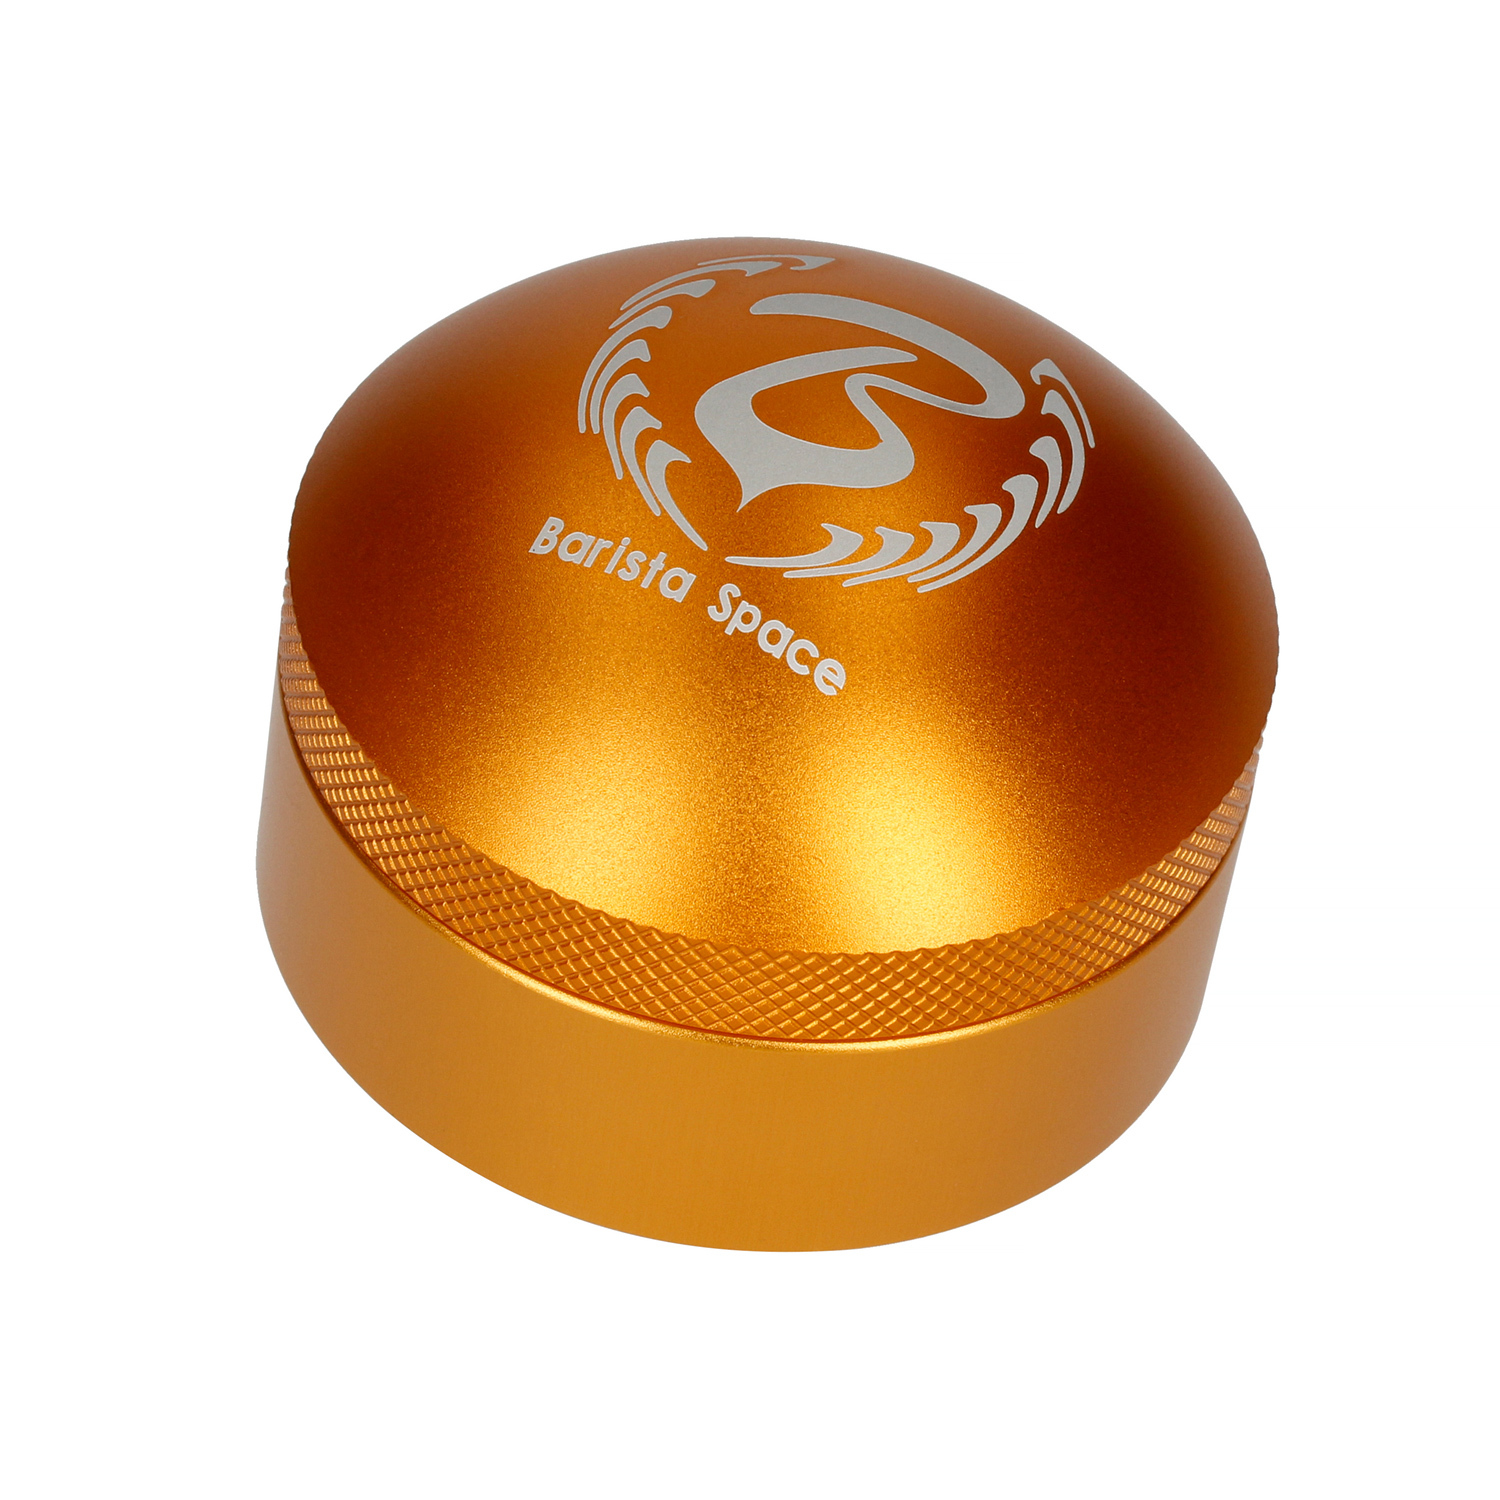 Barista Space - C1 Distribution Tool Golden - Złoty dystrybutor do kawy 58mm